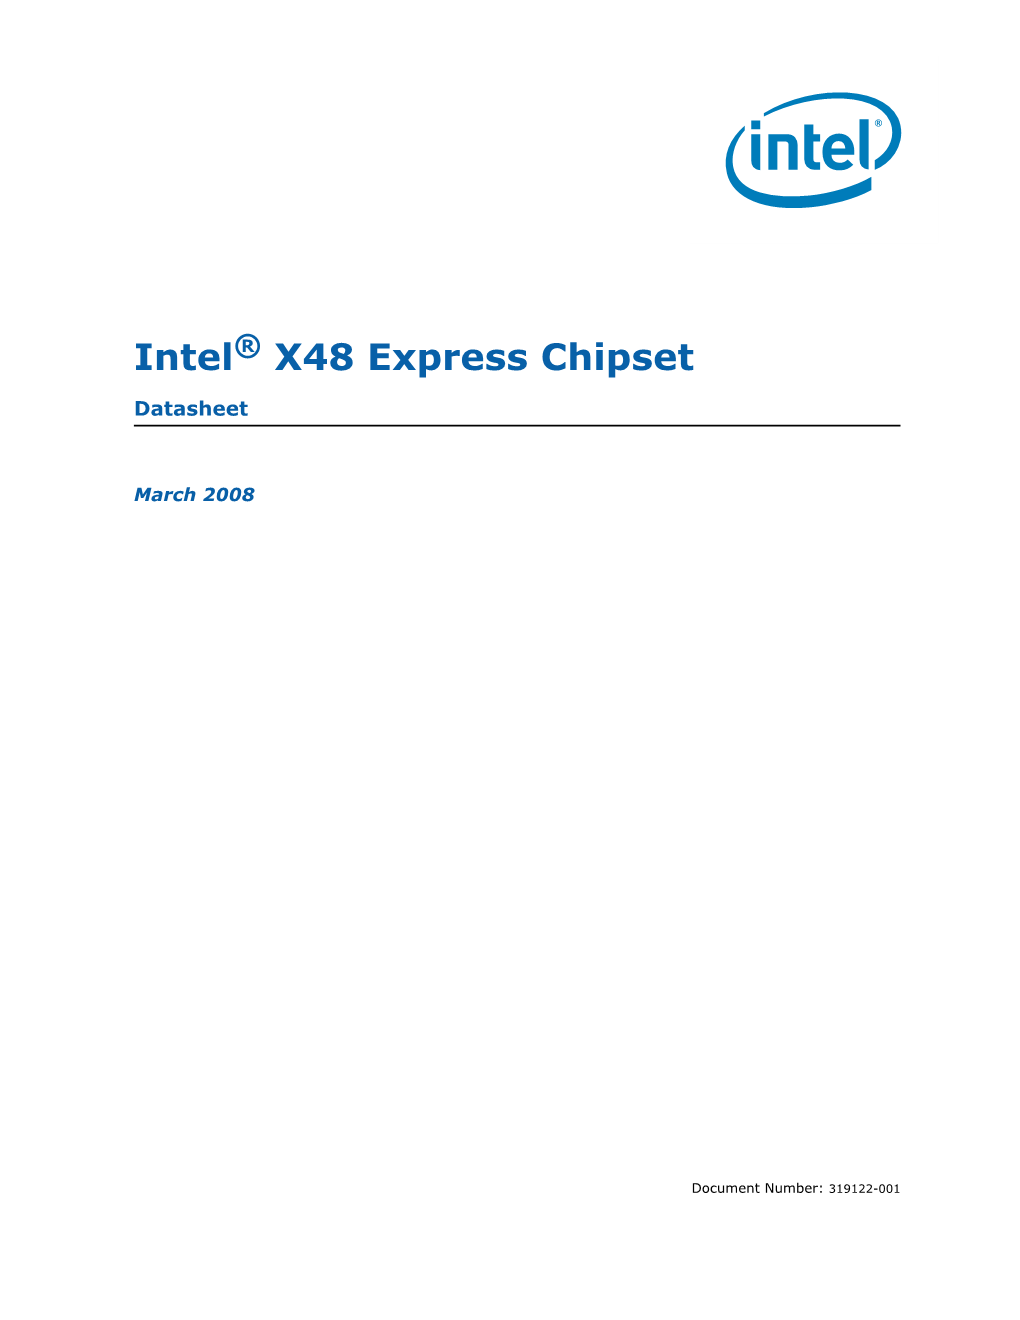 Intel® X48 Express Chipset Datasheet